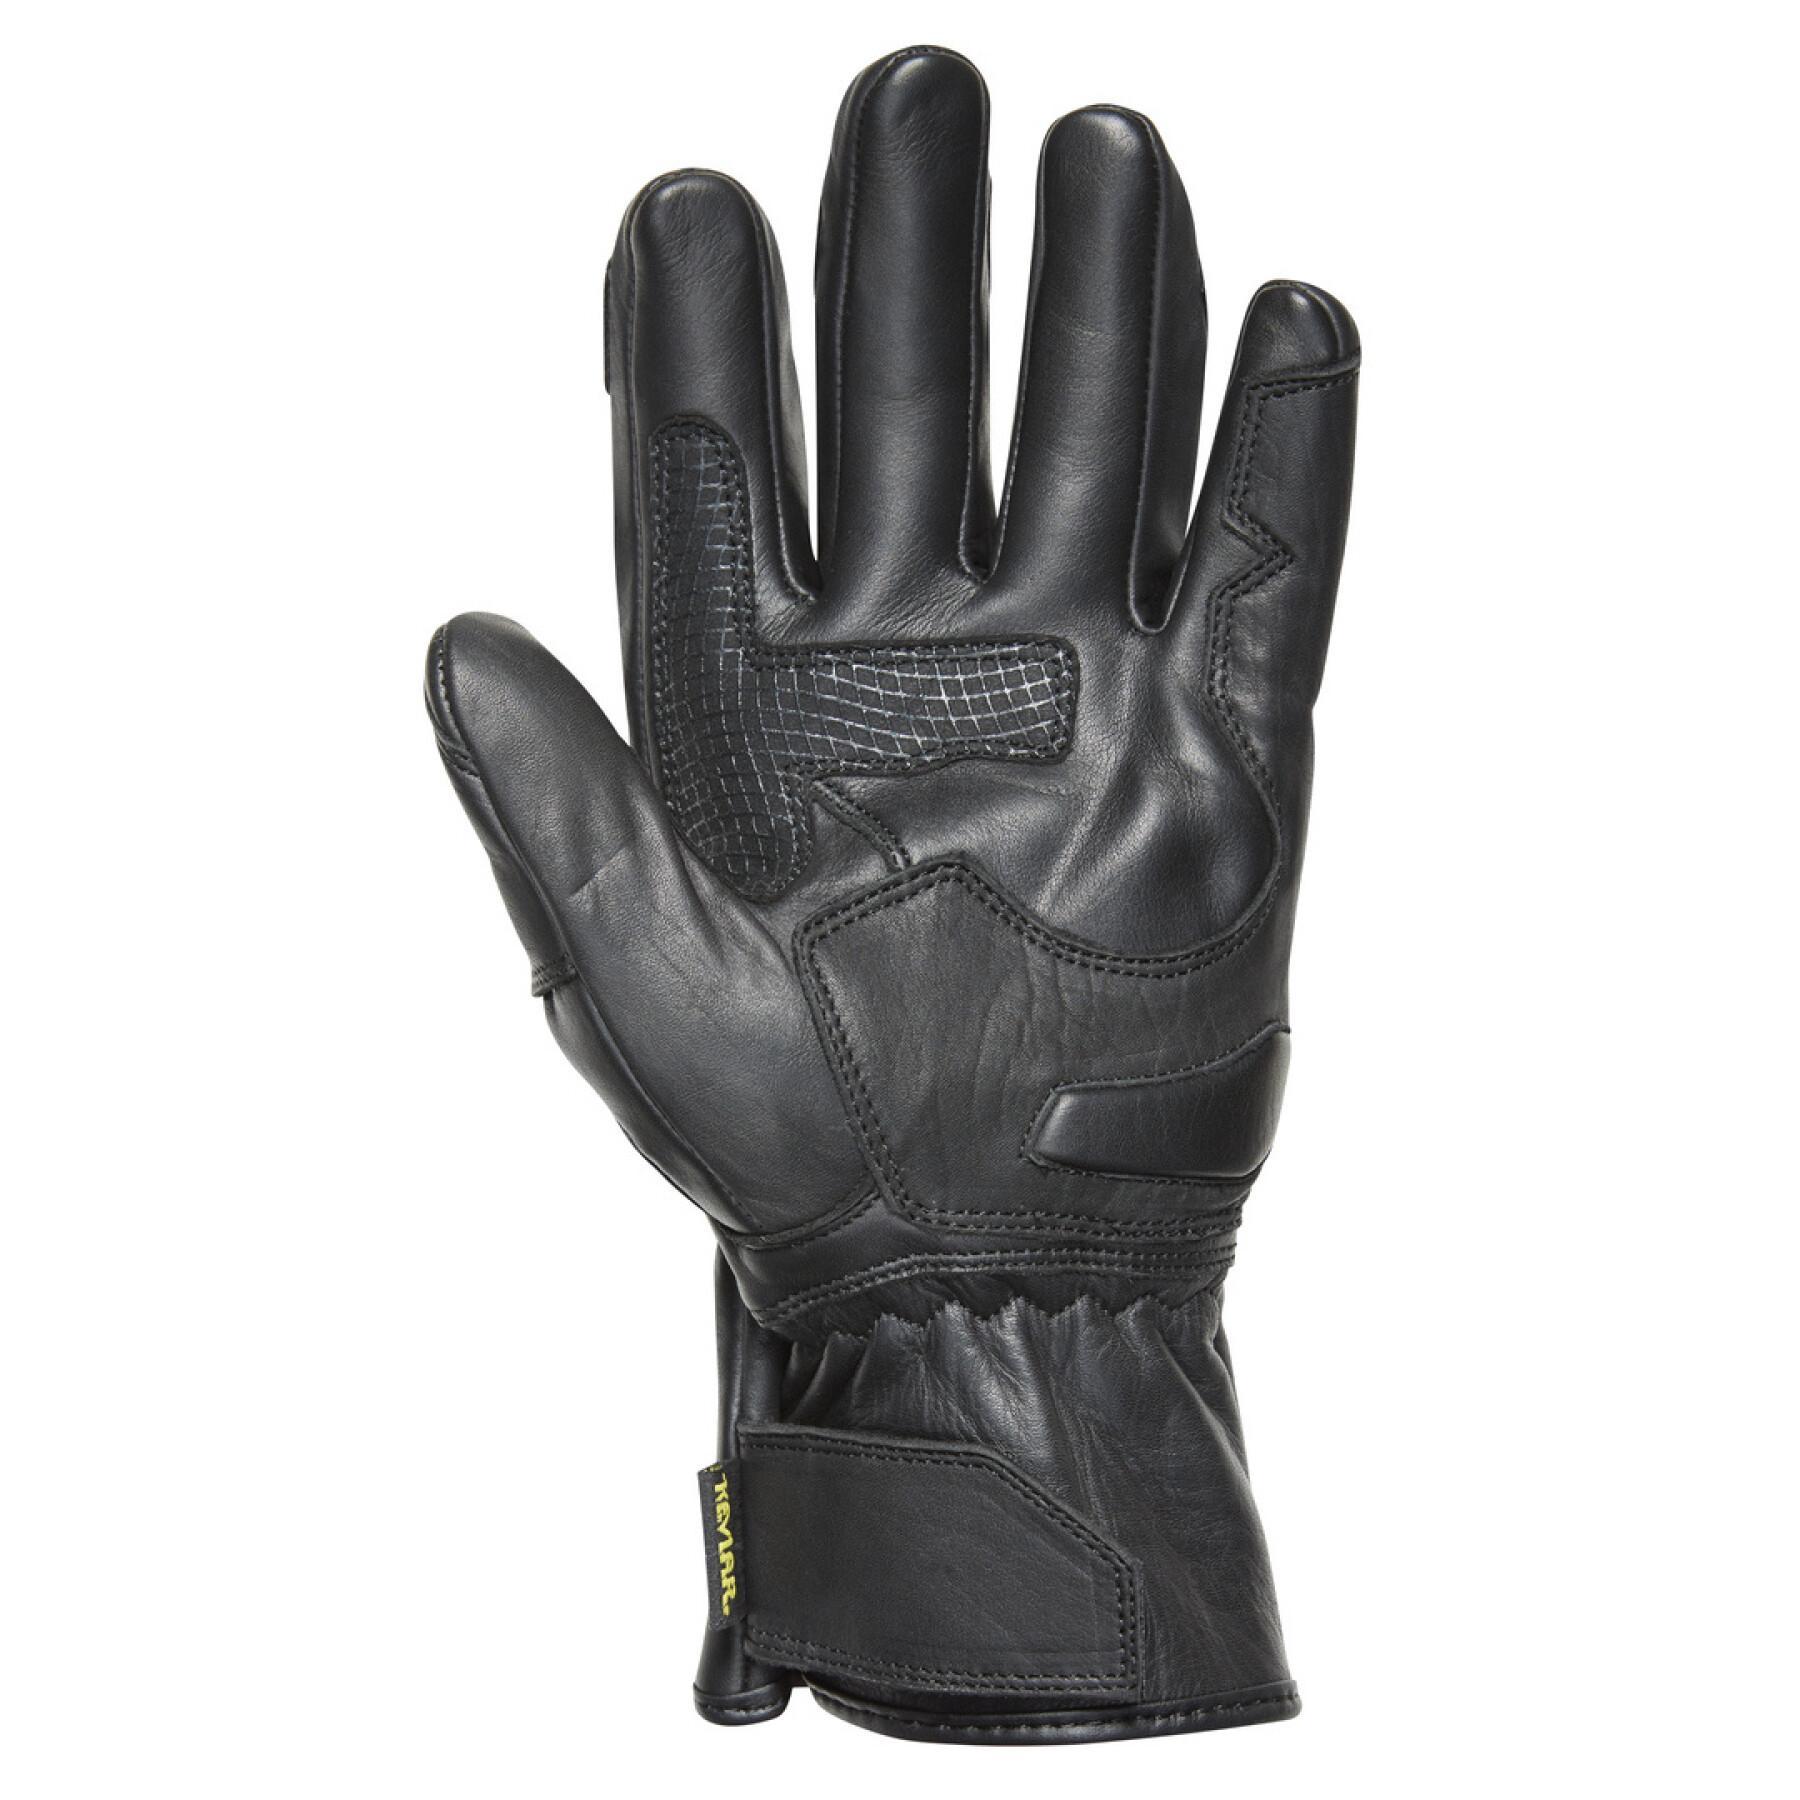 All season motorcycle gloves IXS force